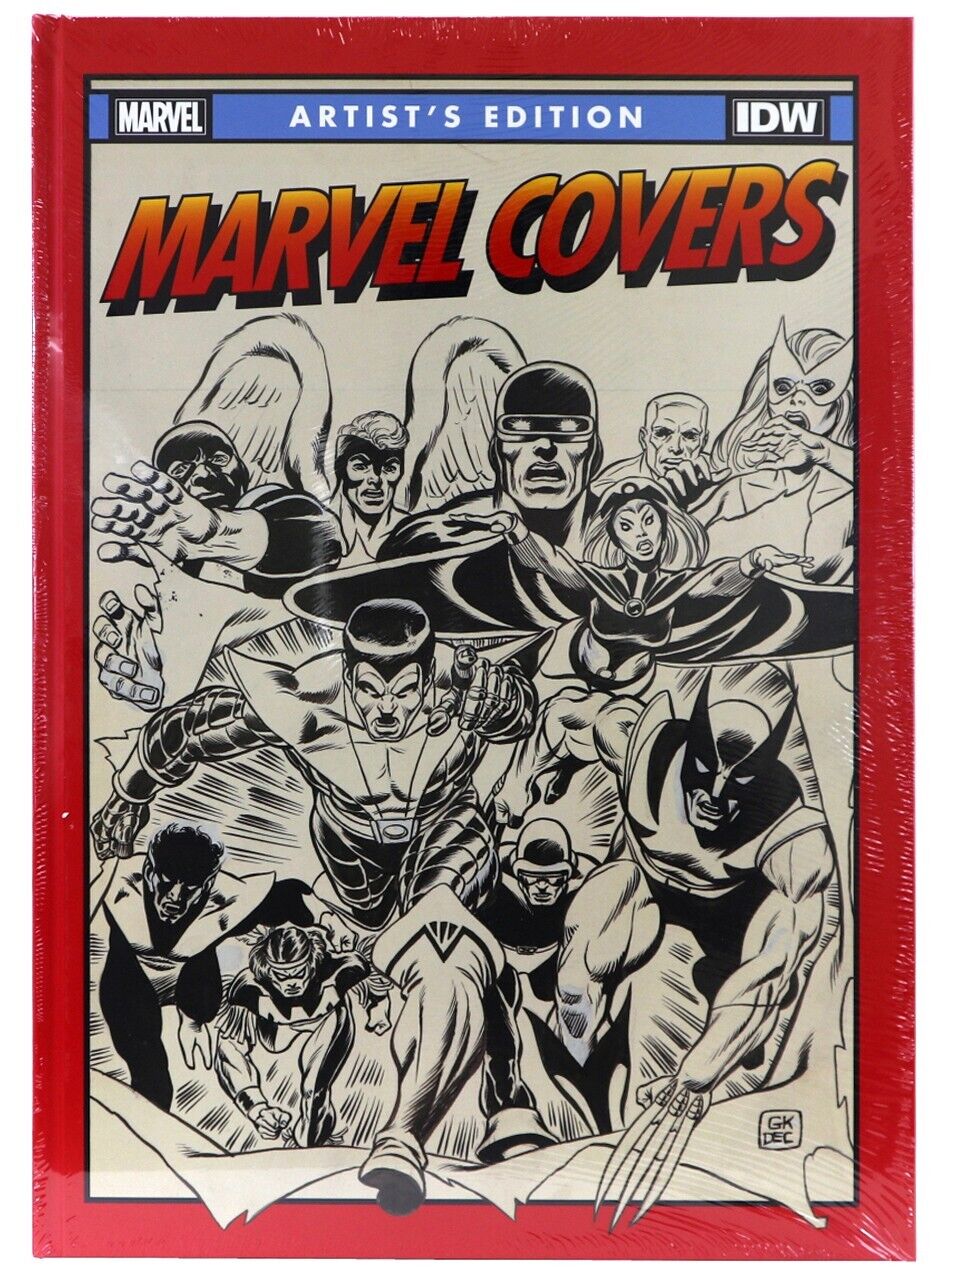 IDW Marvel Comics Covers Artist's Edition Hardcover Cockrum Romita Adams 2014